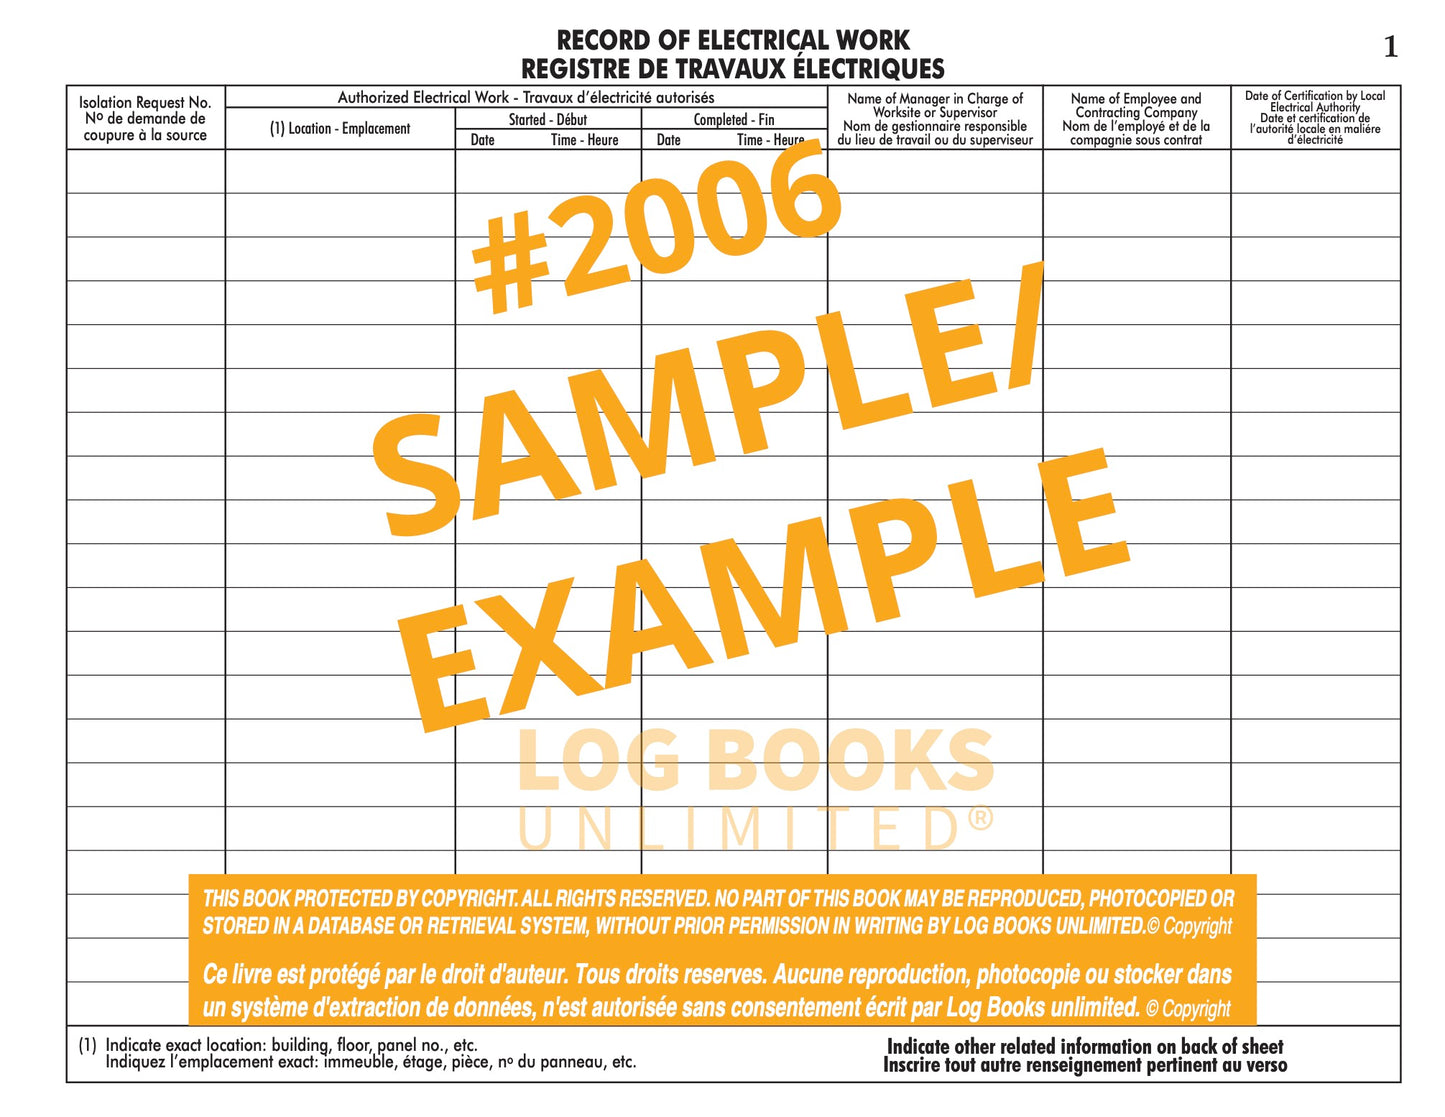 Record of Electrical Work Log Book (Bi-lingual) #2006